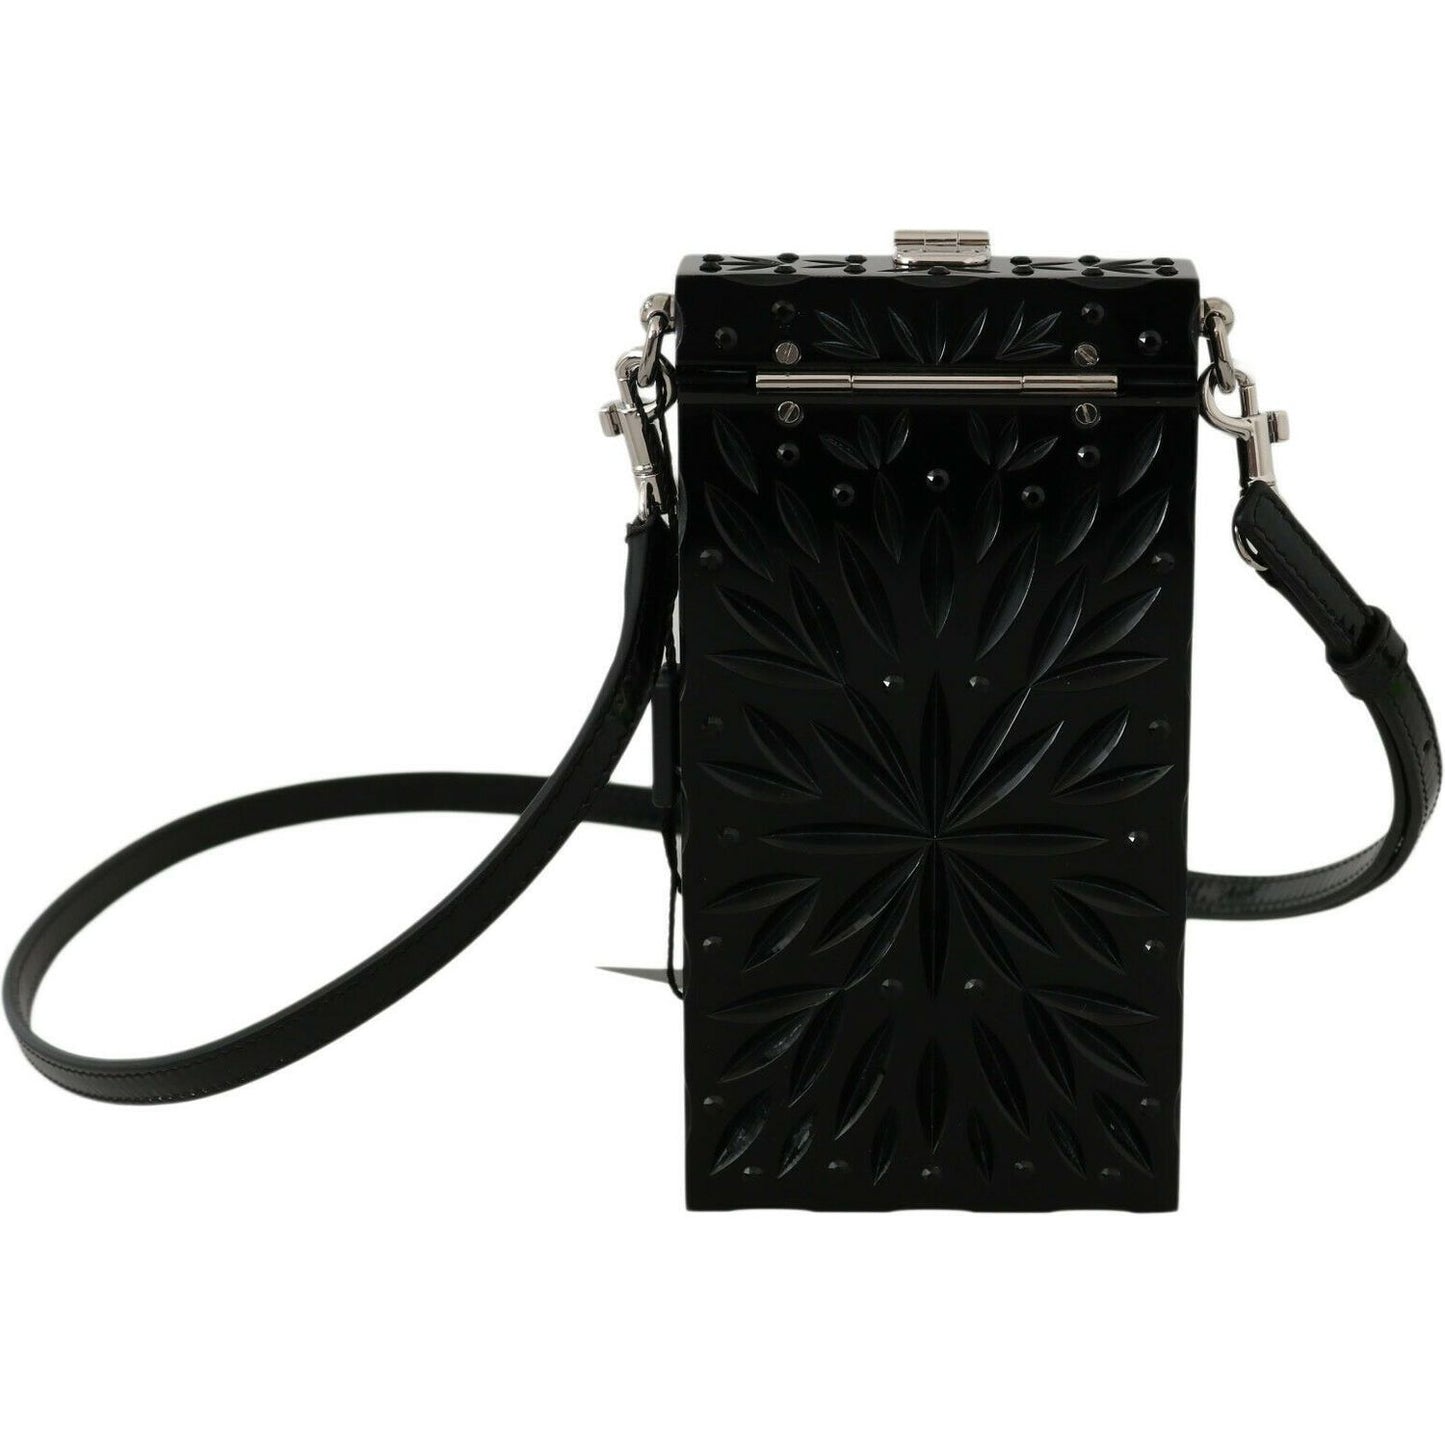 Dolce & Gabbana Exquisite Crystal-Plexi Cigarette Case Holder black-crystal-plexiglass-cross-cigarette-case-holder s-l1600-32-6a5b7e61-2f5.jpg